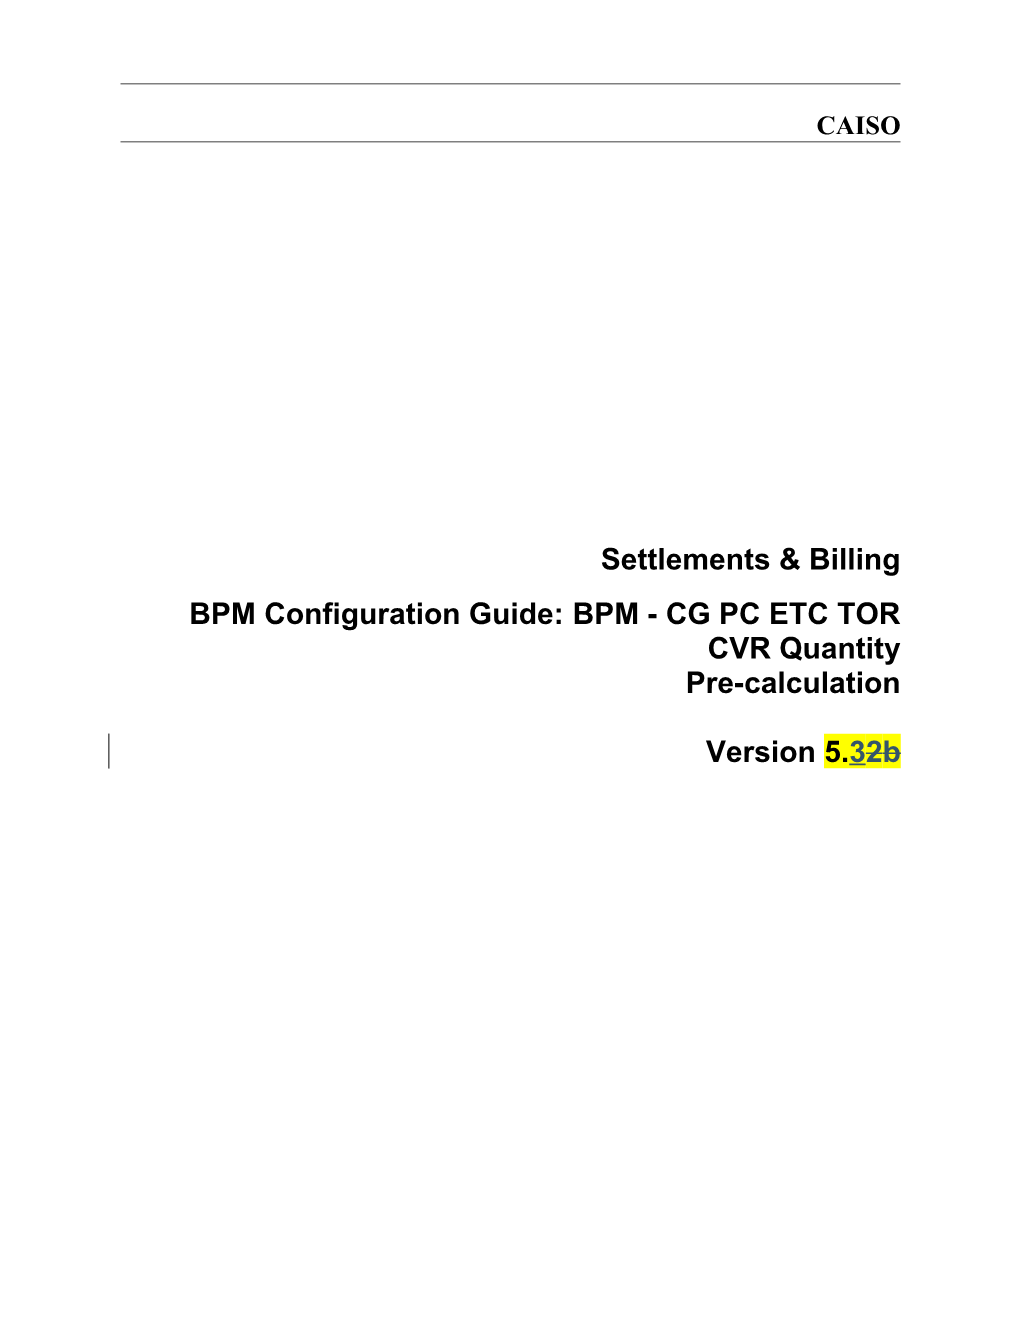 BPM - CG PC ETC TOR CVR Quantity